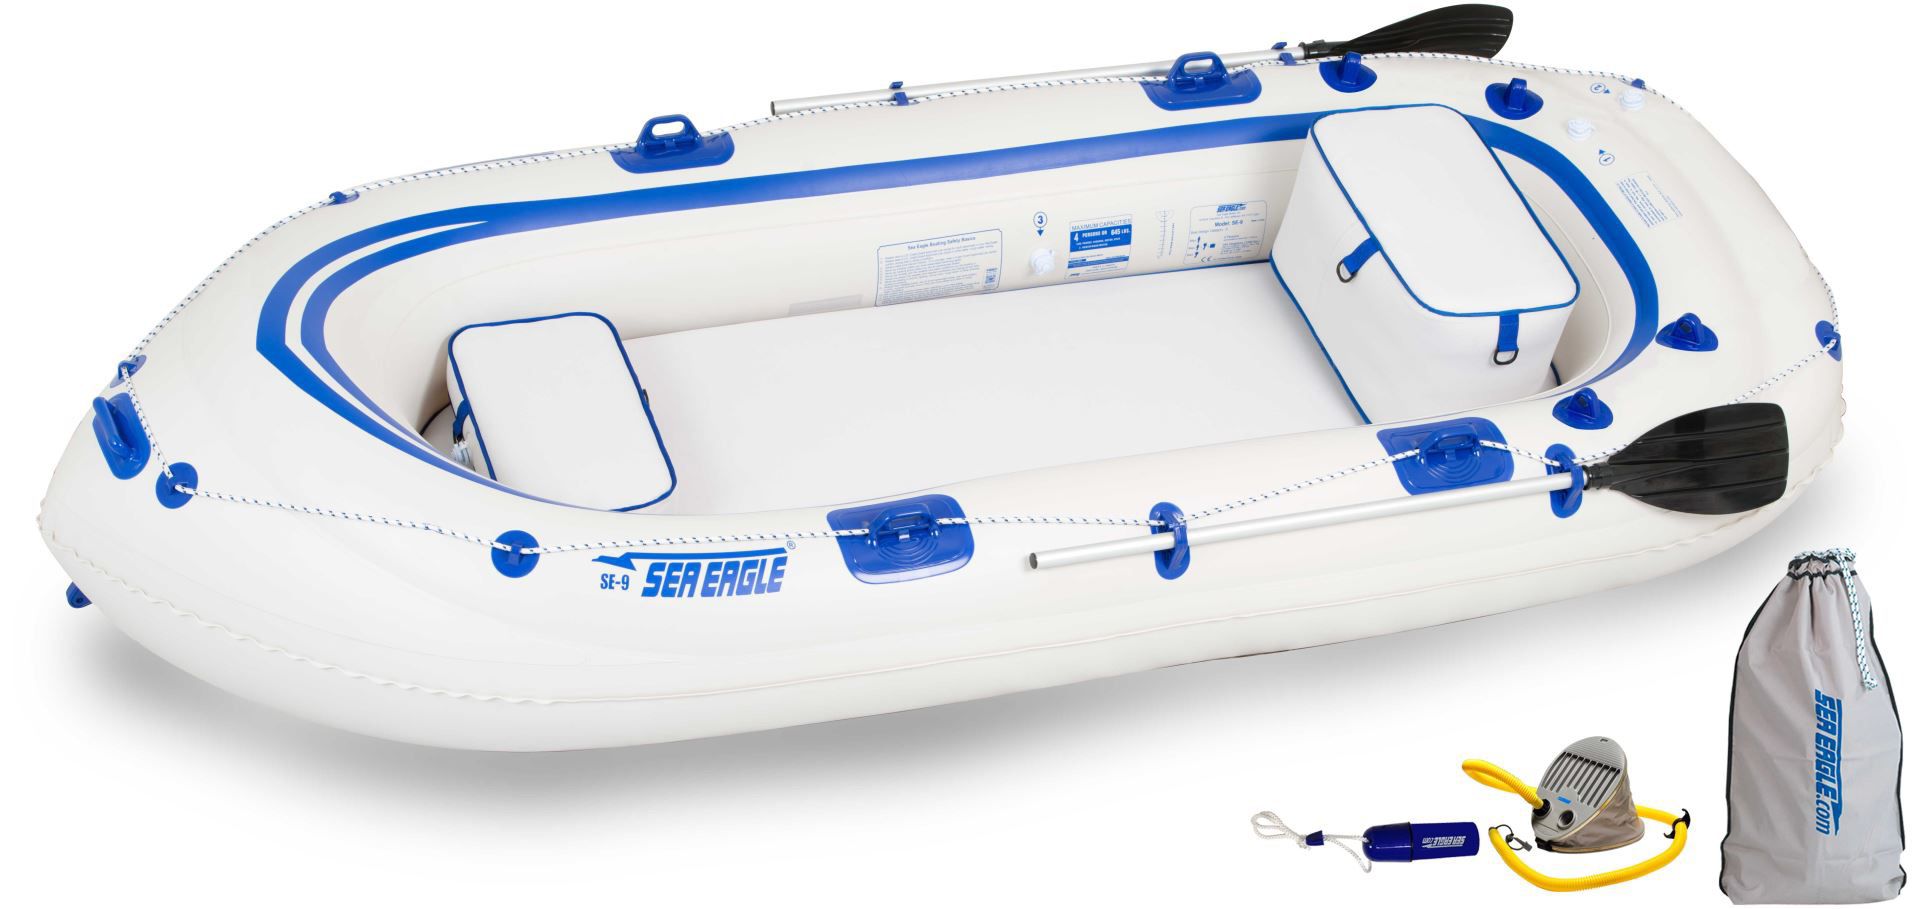 Sea Eagle Fishing Boat Inflatable NEW